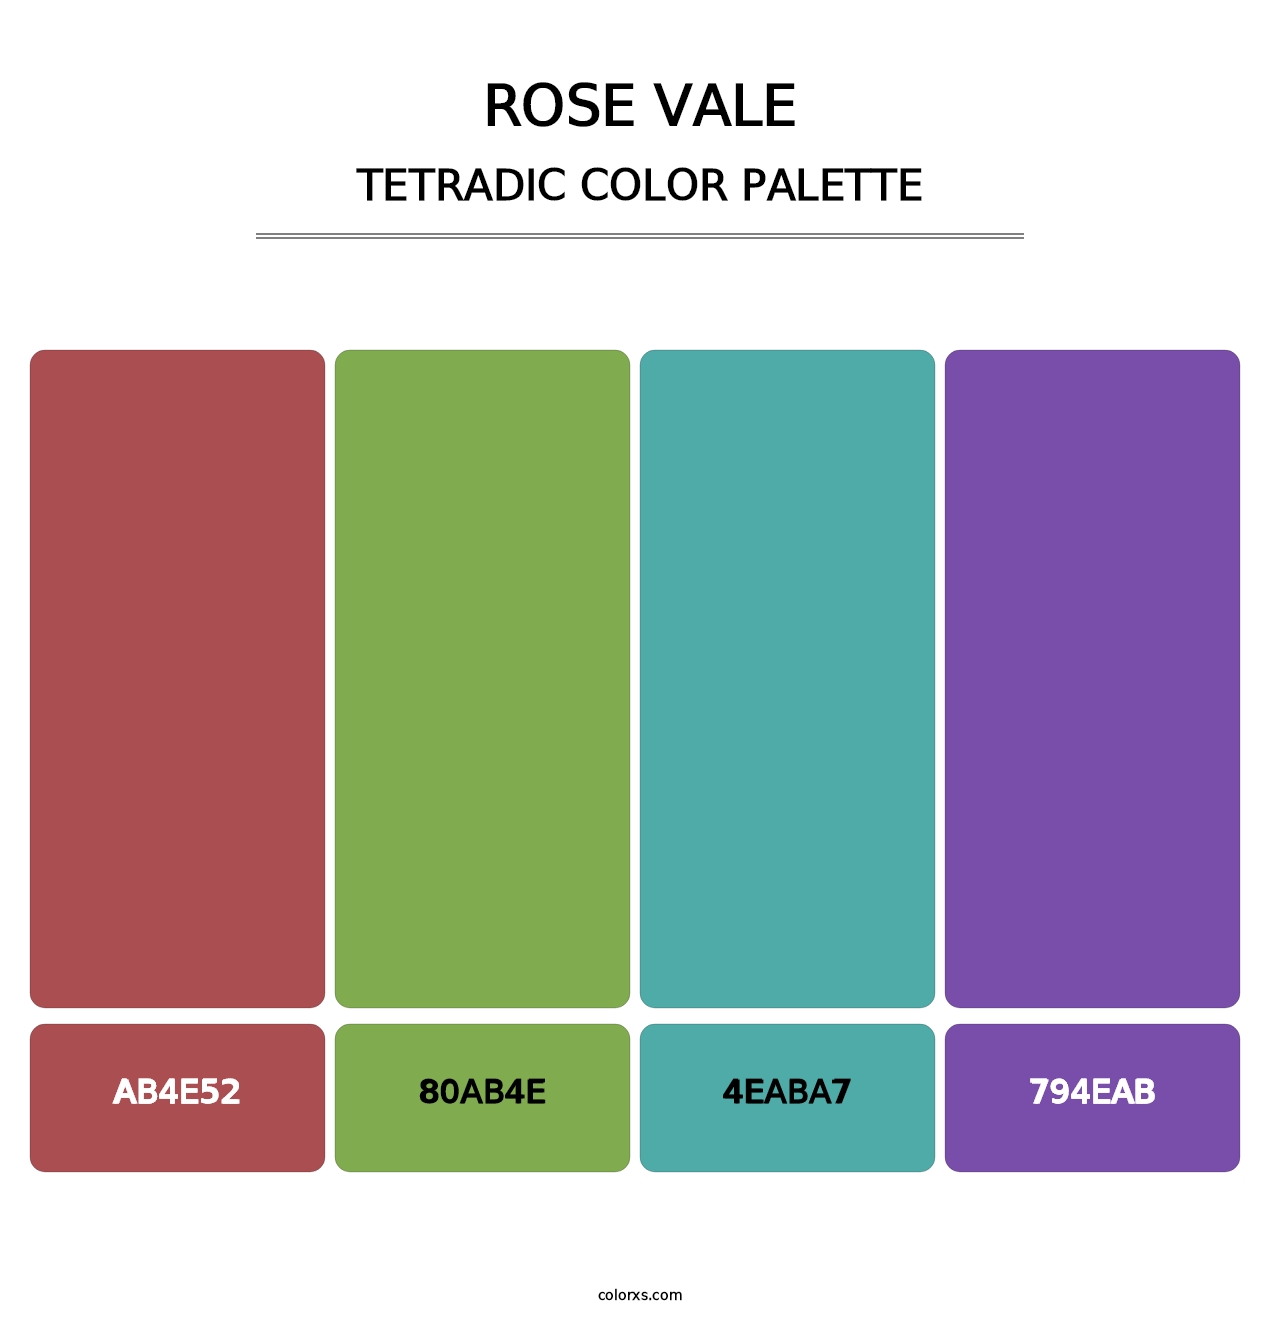 Rose Vale - Tetradic Color Palette